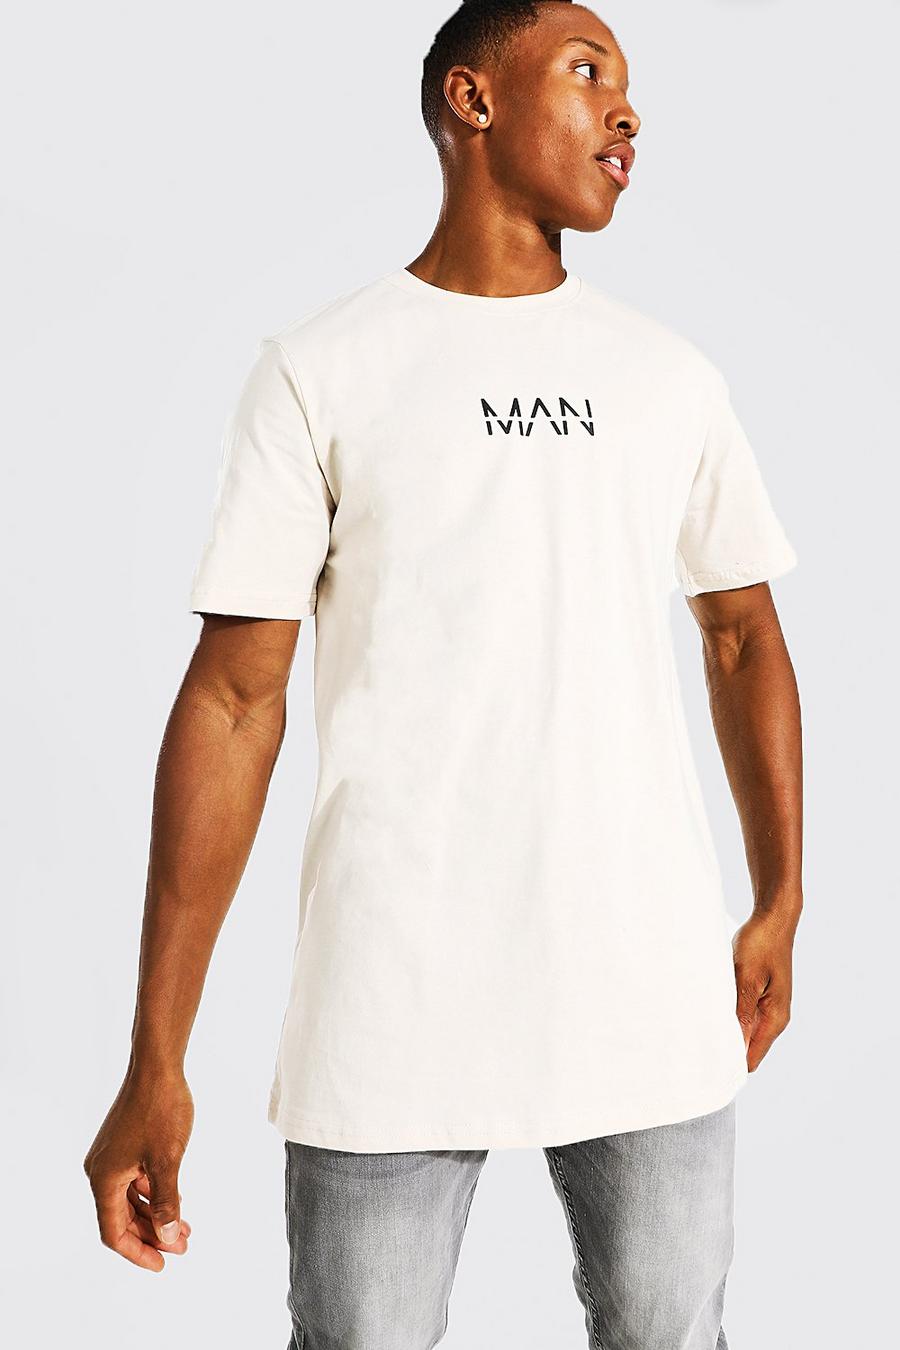 Pumice stone Original Man Longline T-shirt image number 1